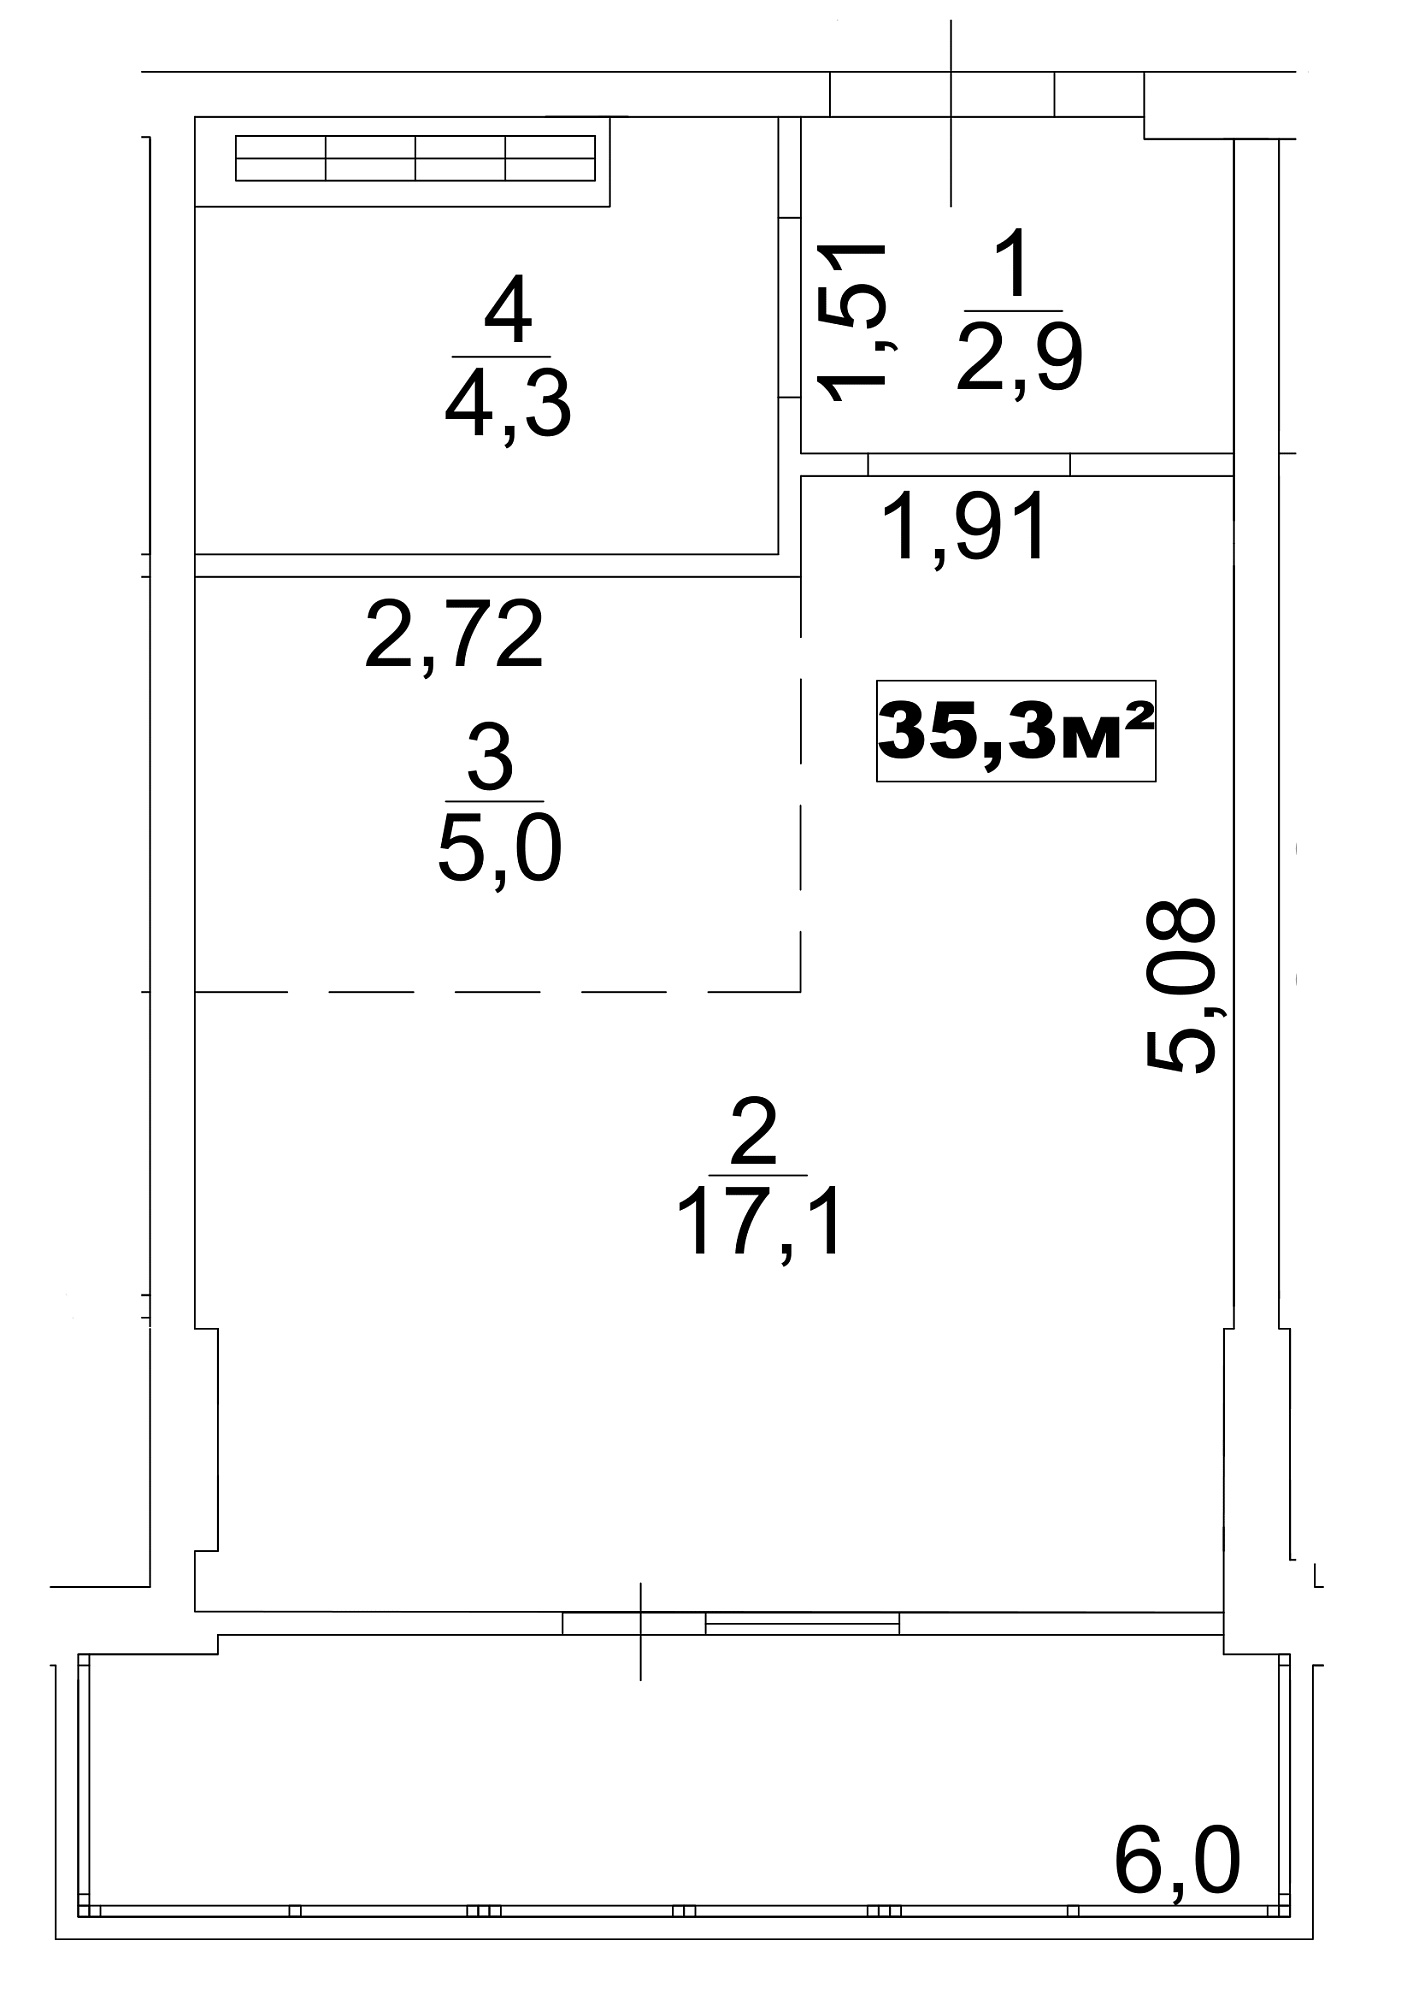 Planning Smart flats area 35.3m2, AB-13-08/0061б.